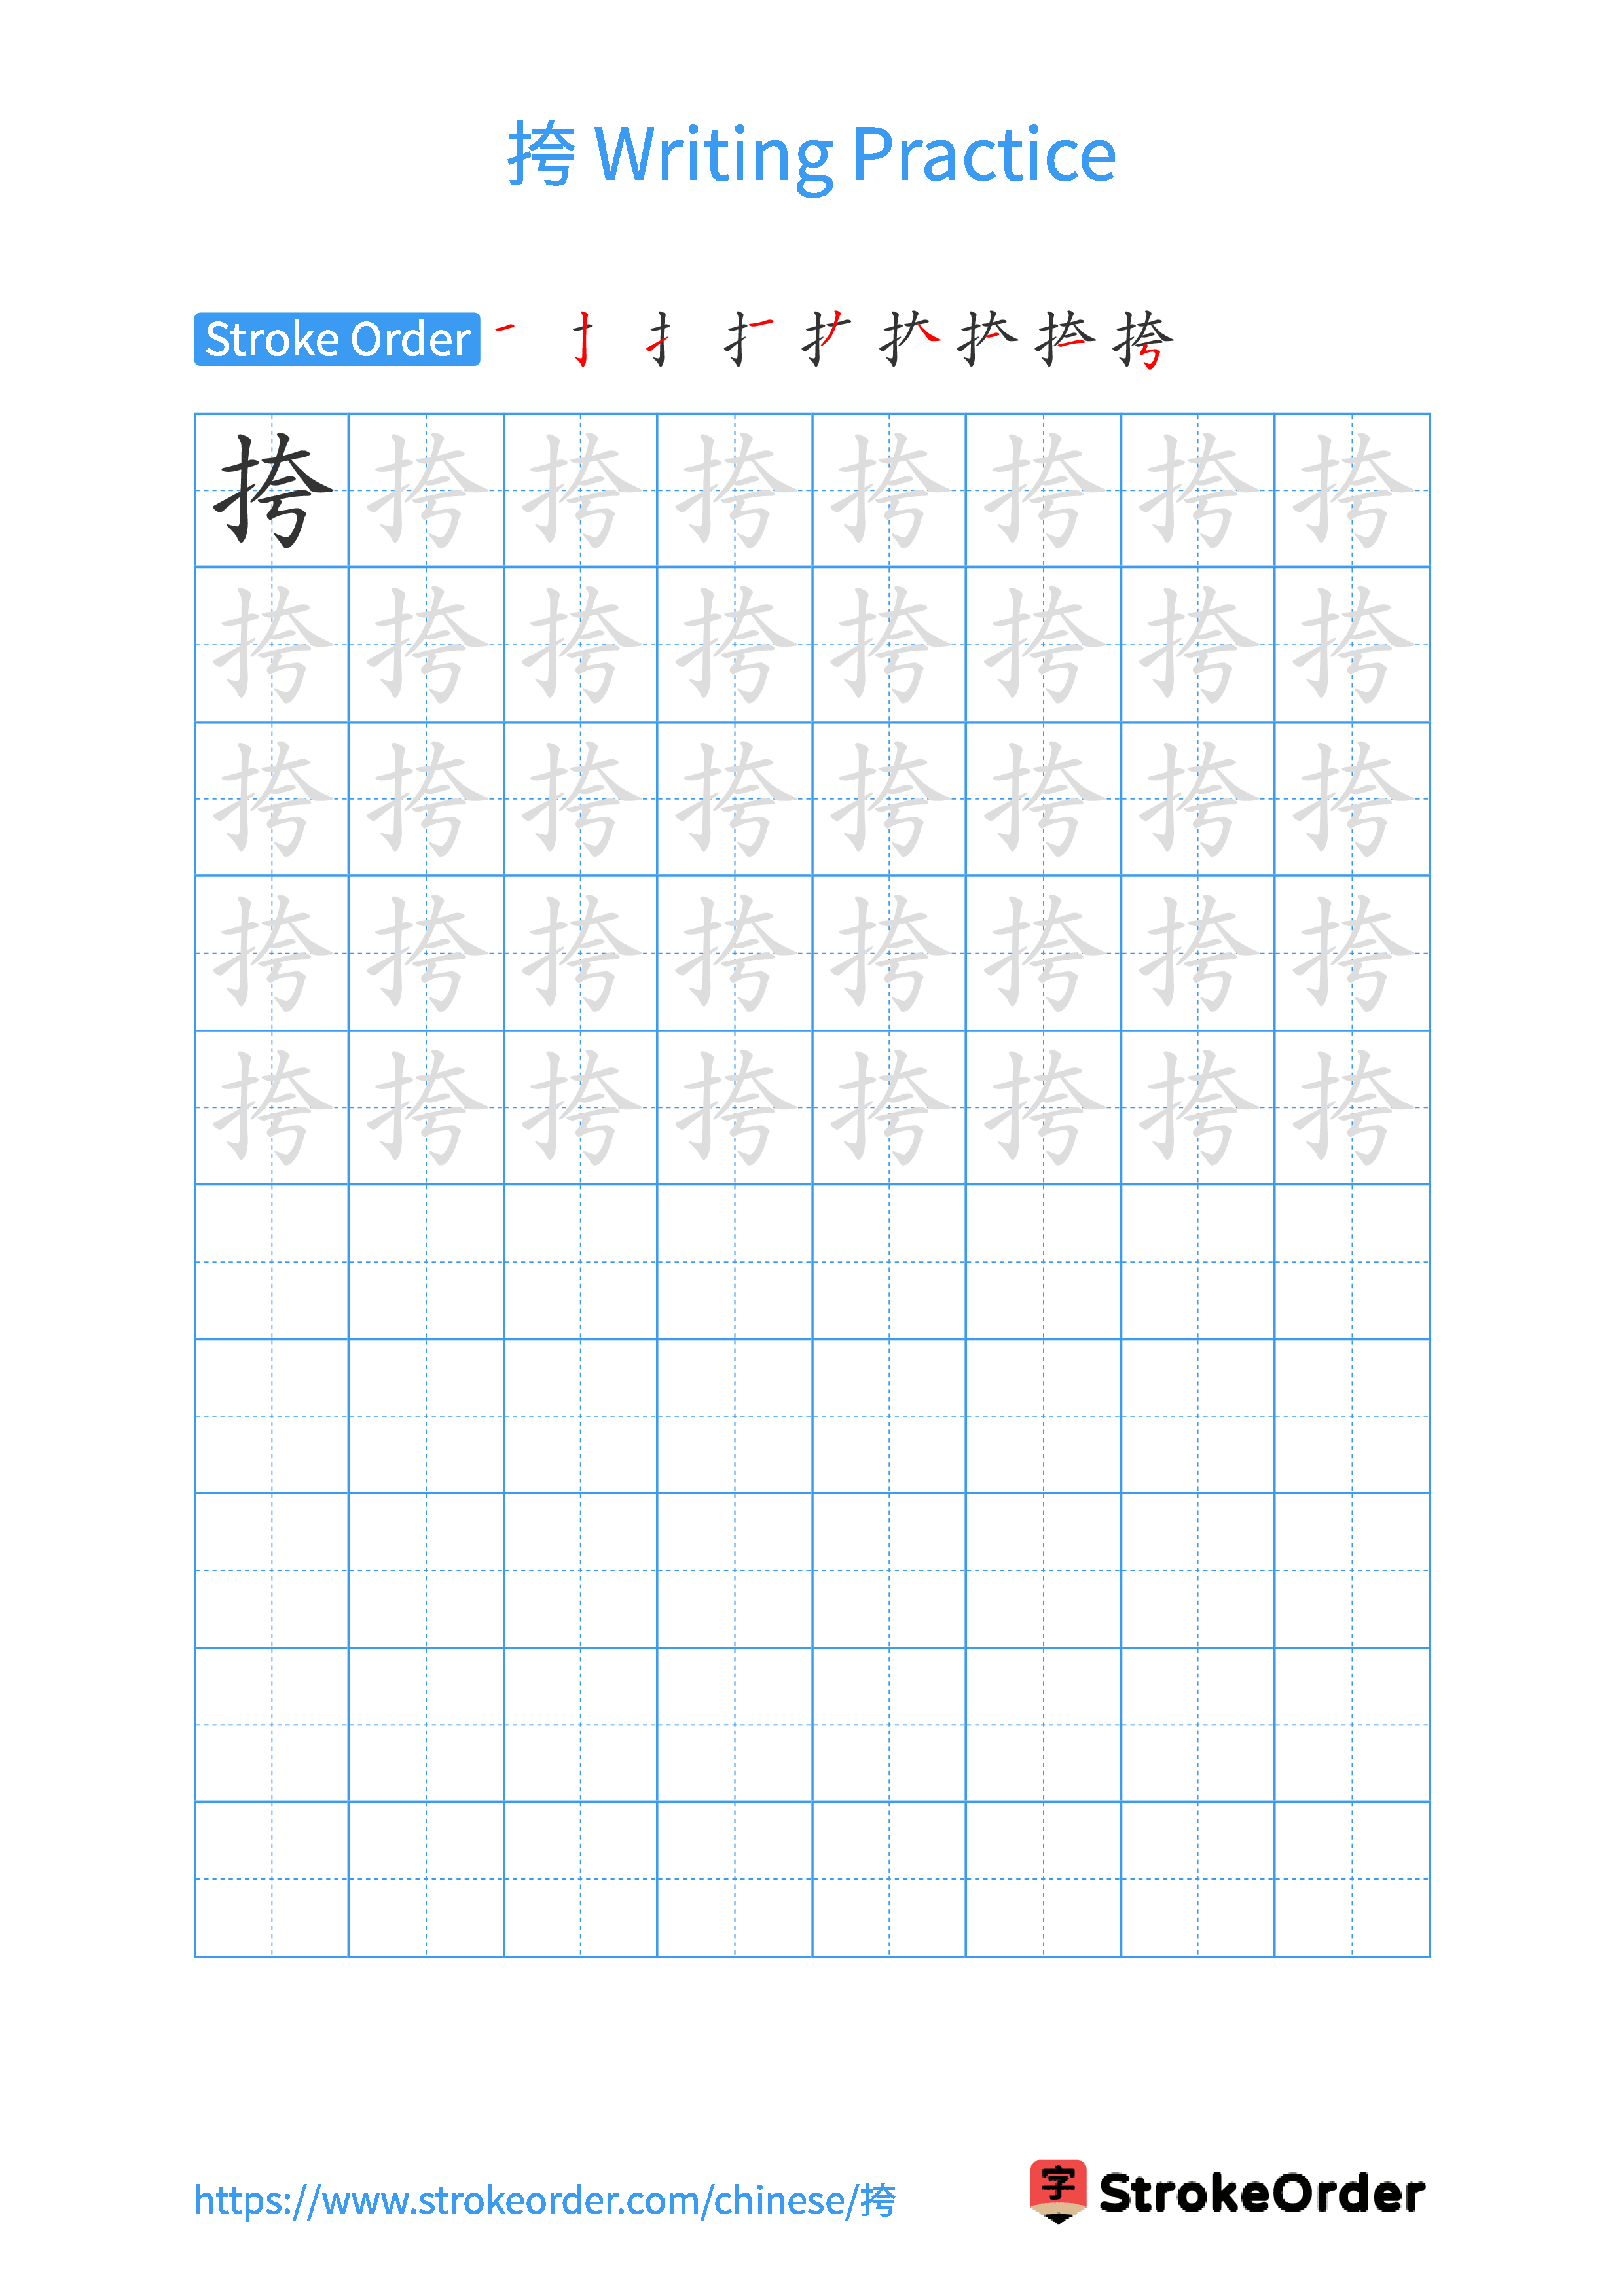 Printable Handwriting Practice Worksheet of the Chinese character 挎 in Portrait Orientation (Tian Zi Ge)